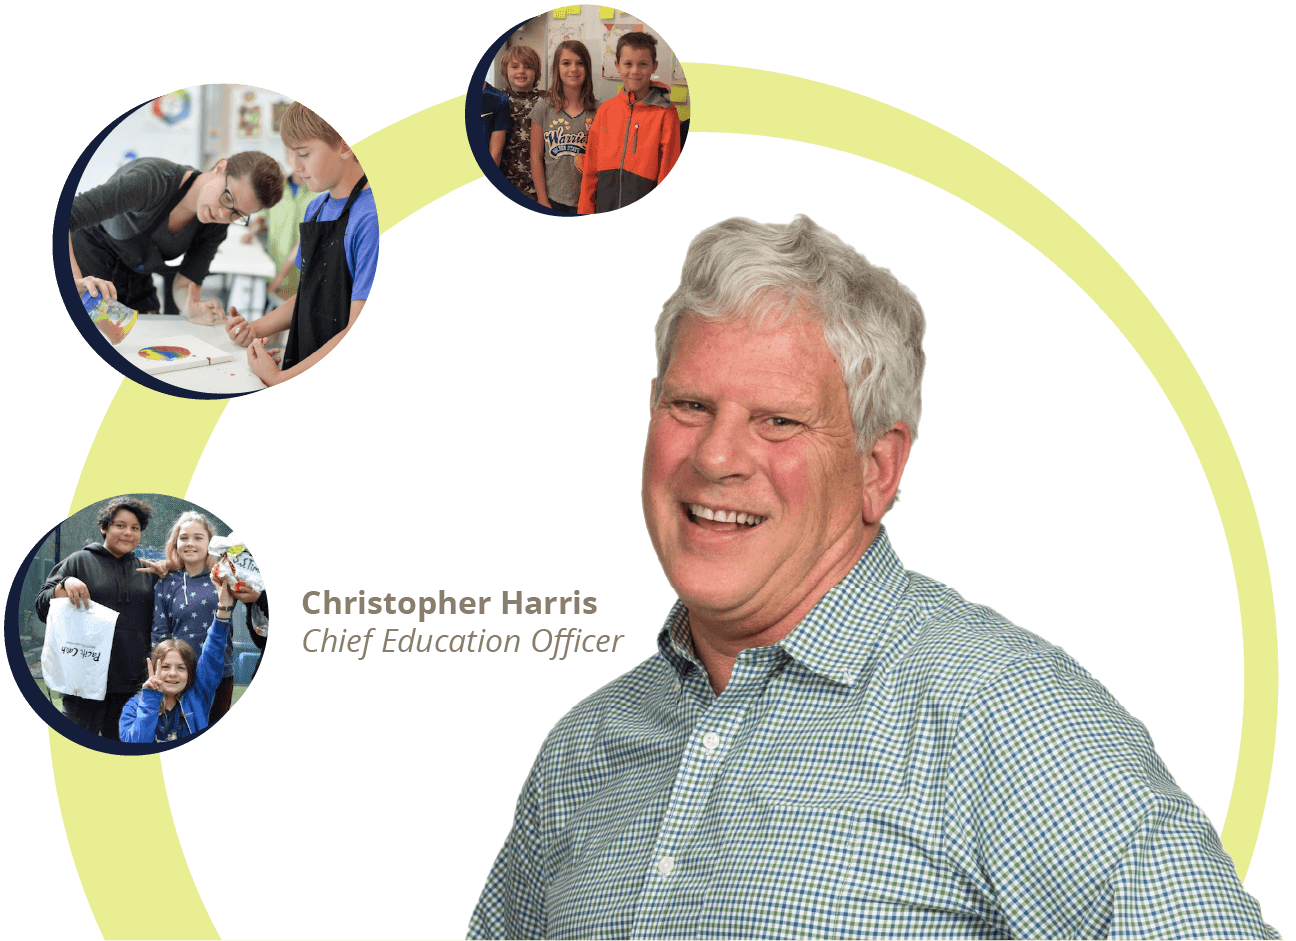 Chris Harris, MEd Kriewall-Haehl Family Sand Hill School Head of School, Chief Education Officer, Children’s Health Council